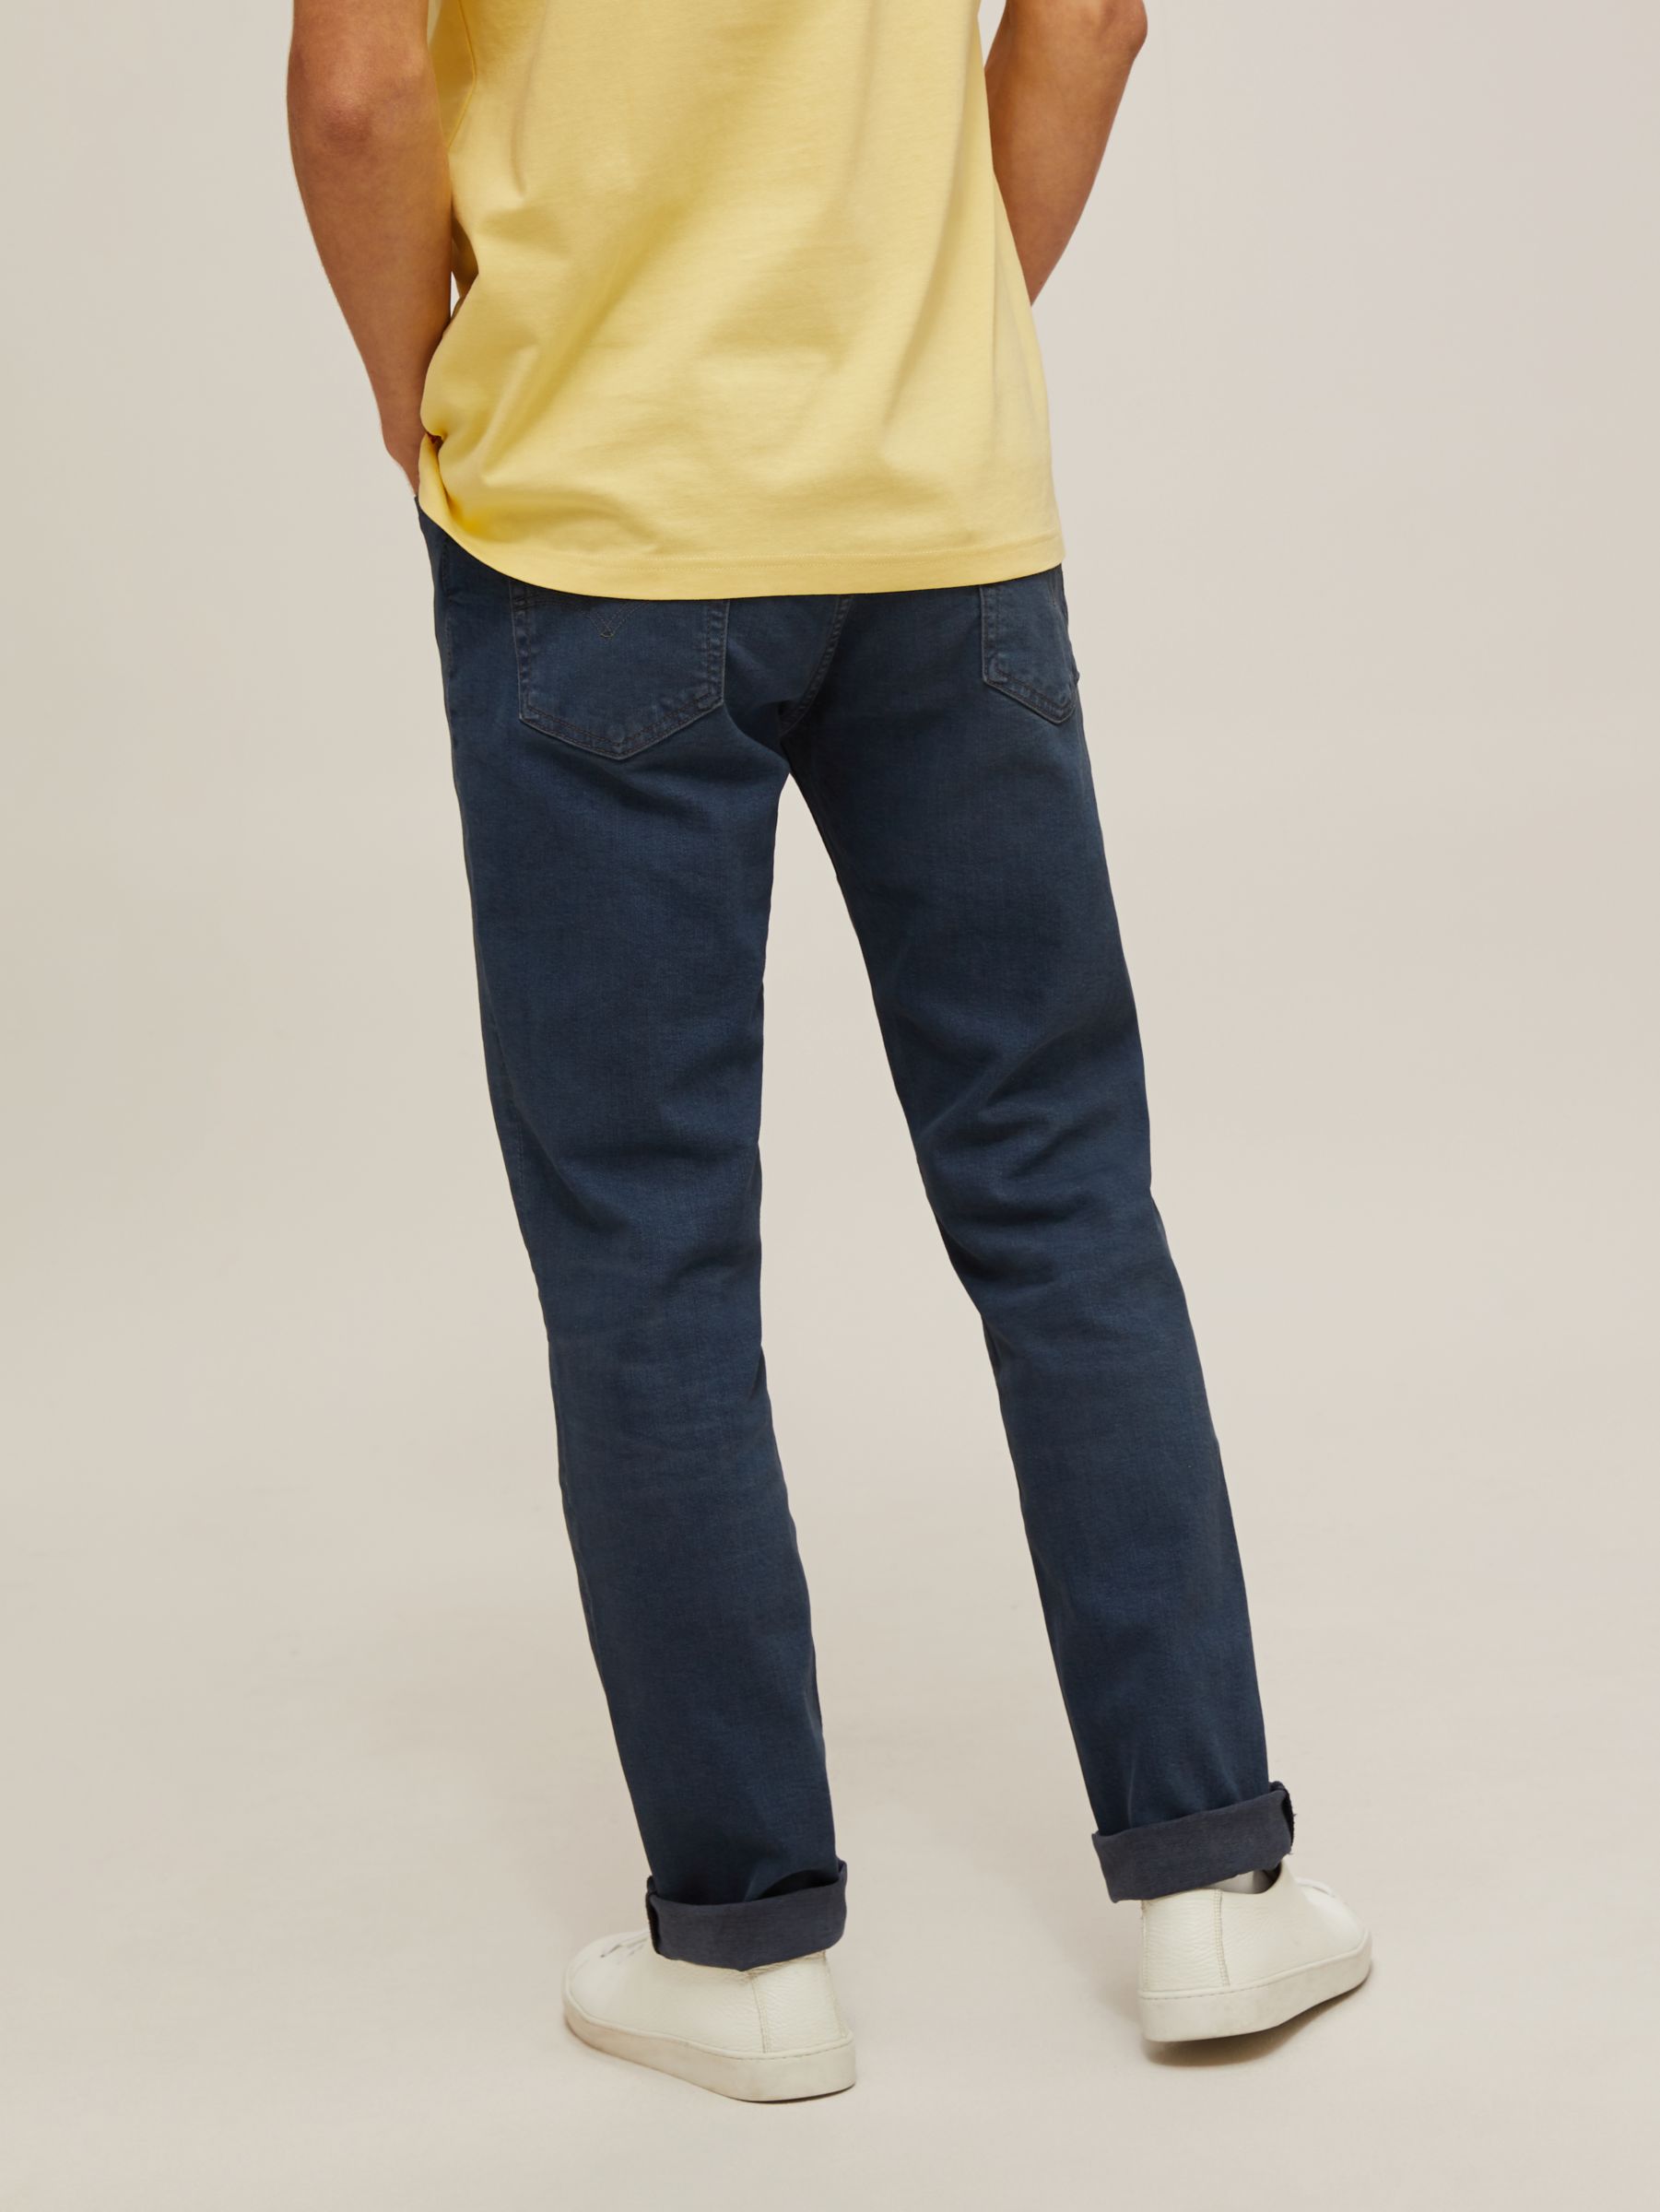 Levi's 511 Slim Fit Stretch Jeans, Blue at John Lewis & Partners